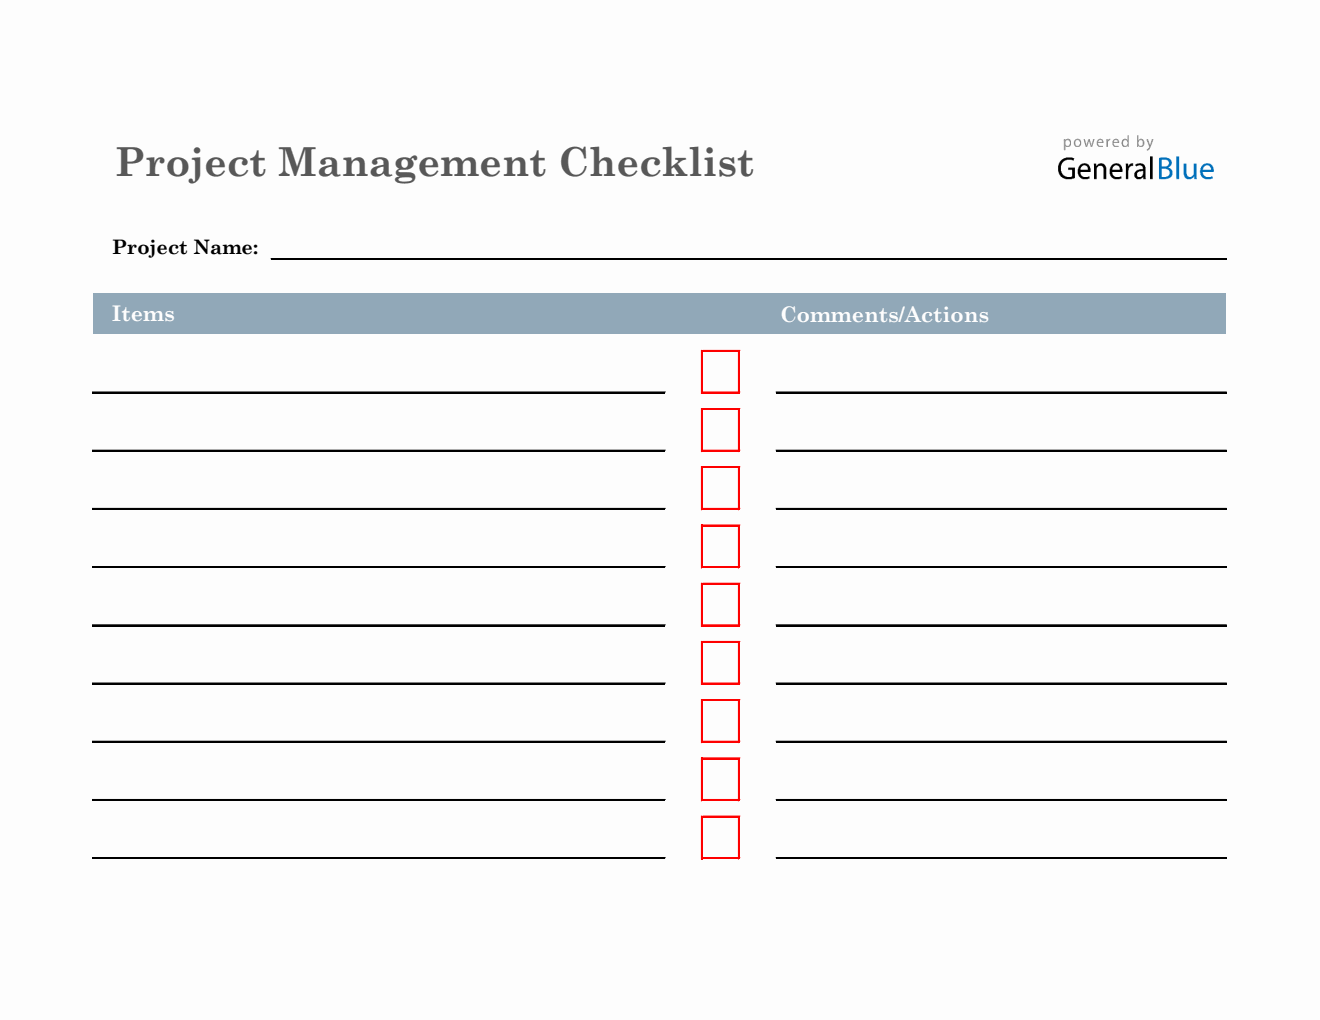 https://www.generalblue.com/project-management-checklist/p/t18dv39wq/f/project-management-checklist-in-excel-md.png?v=34b8cdc24e7cd06b9d54fb2392b52c68